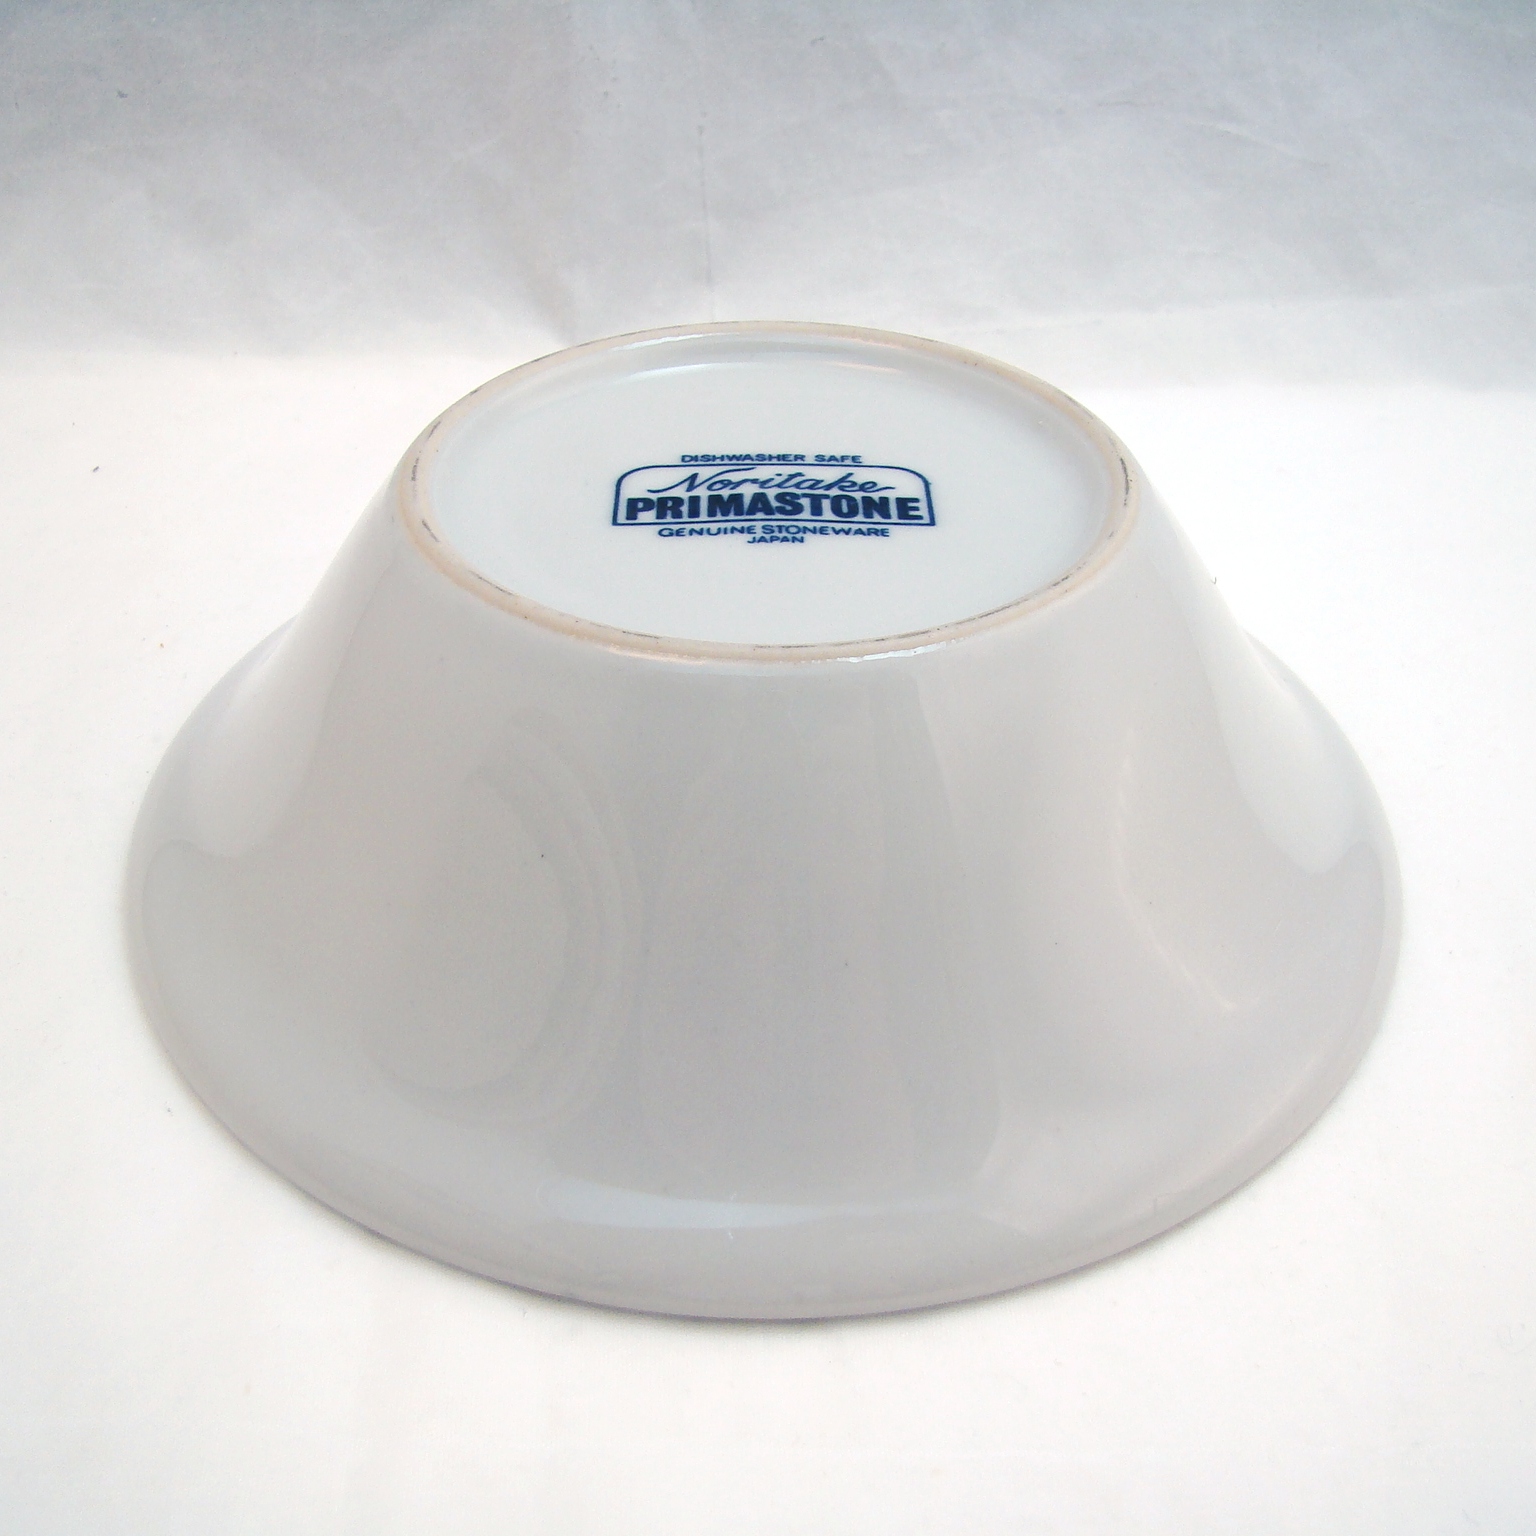 Noritake Primastone Elation Cereal Bowl S 6 1 2 X 2 1 4 Excellent Noritake China Dinnerware Pottery Glass Worldenergy Ae